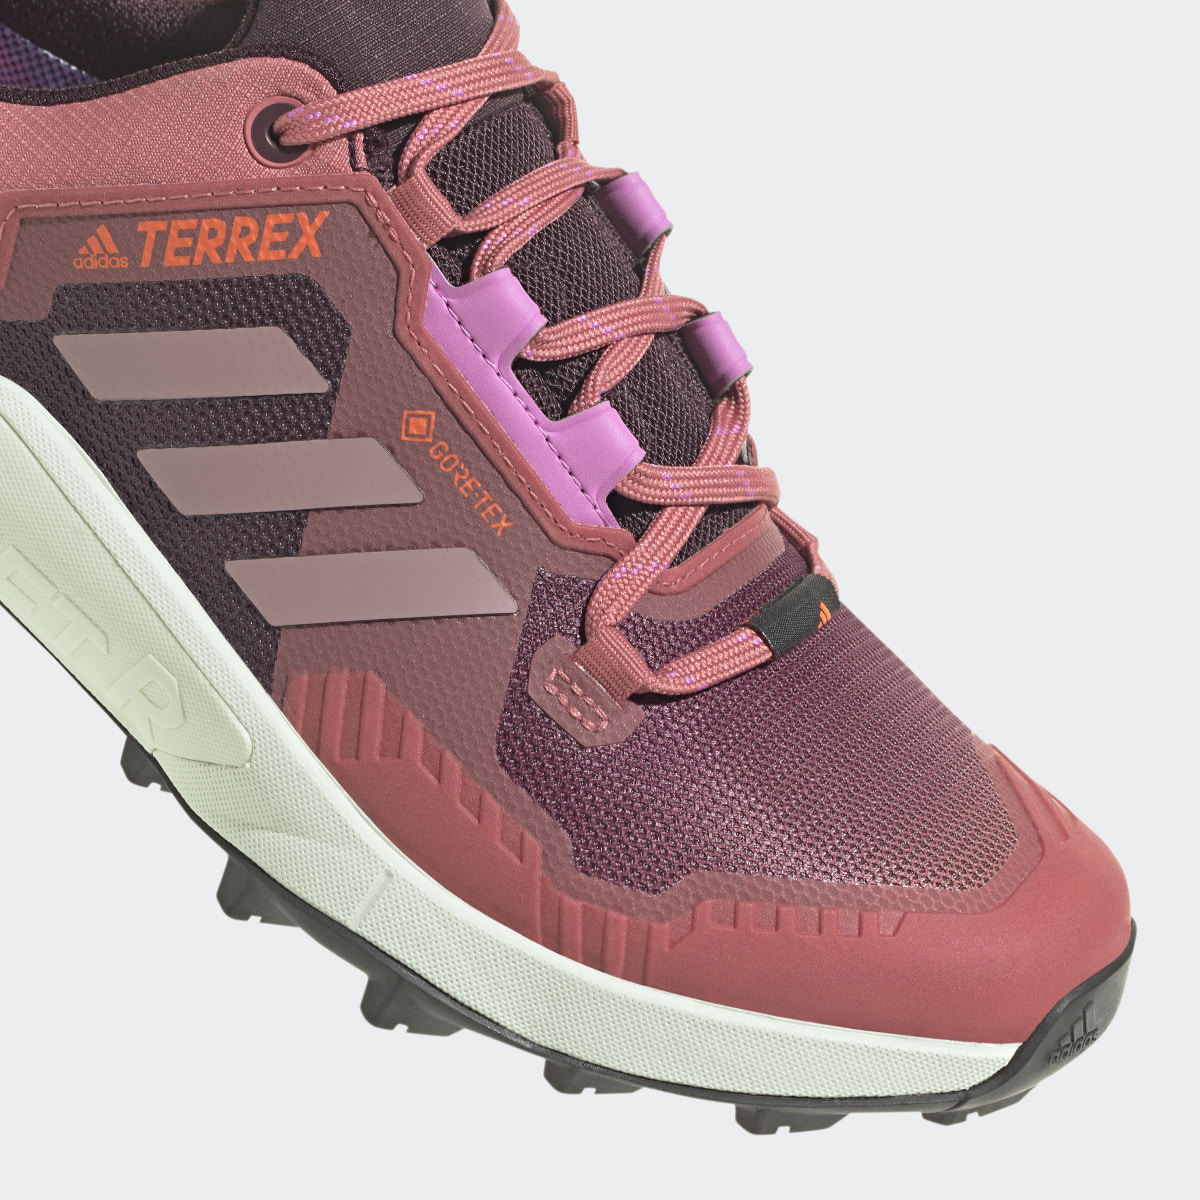 Adidas Chaussure de randonnée Terrex Swift R3 GORE-TEX. 10